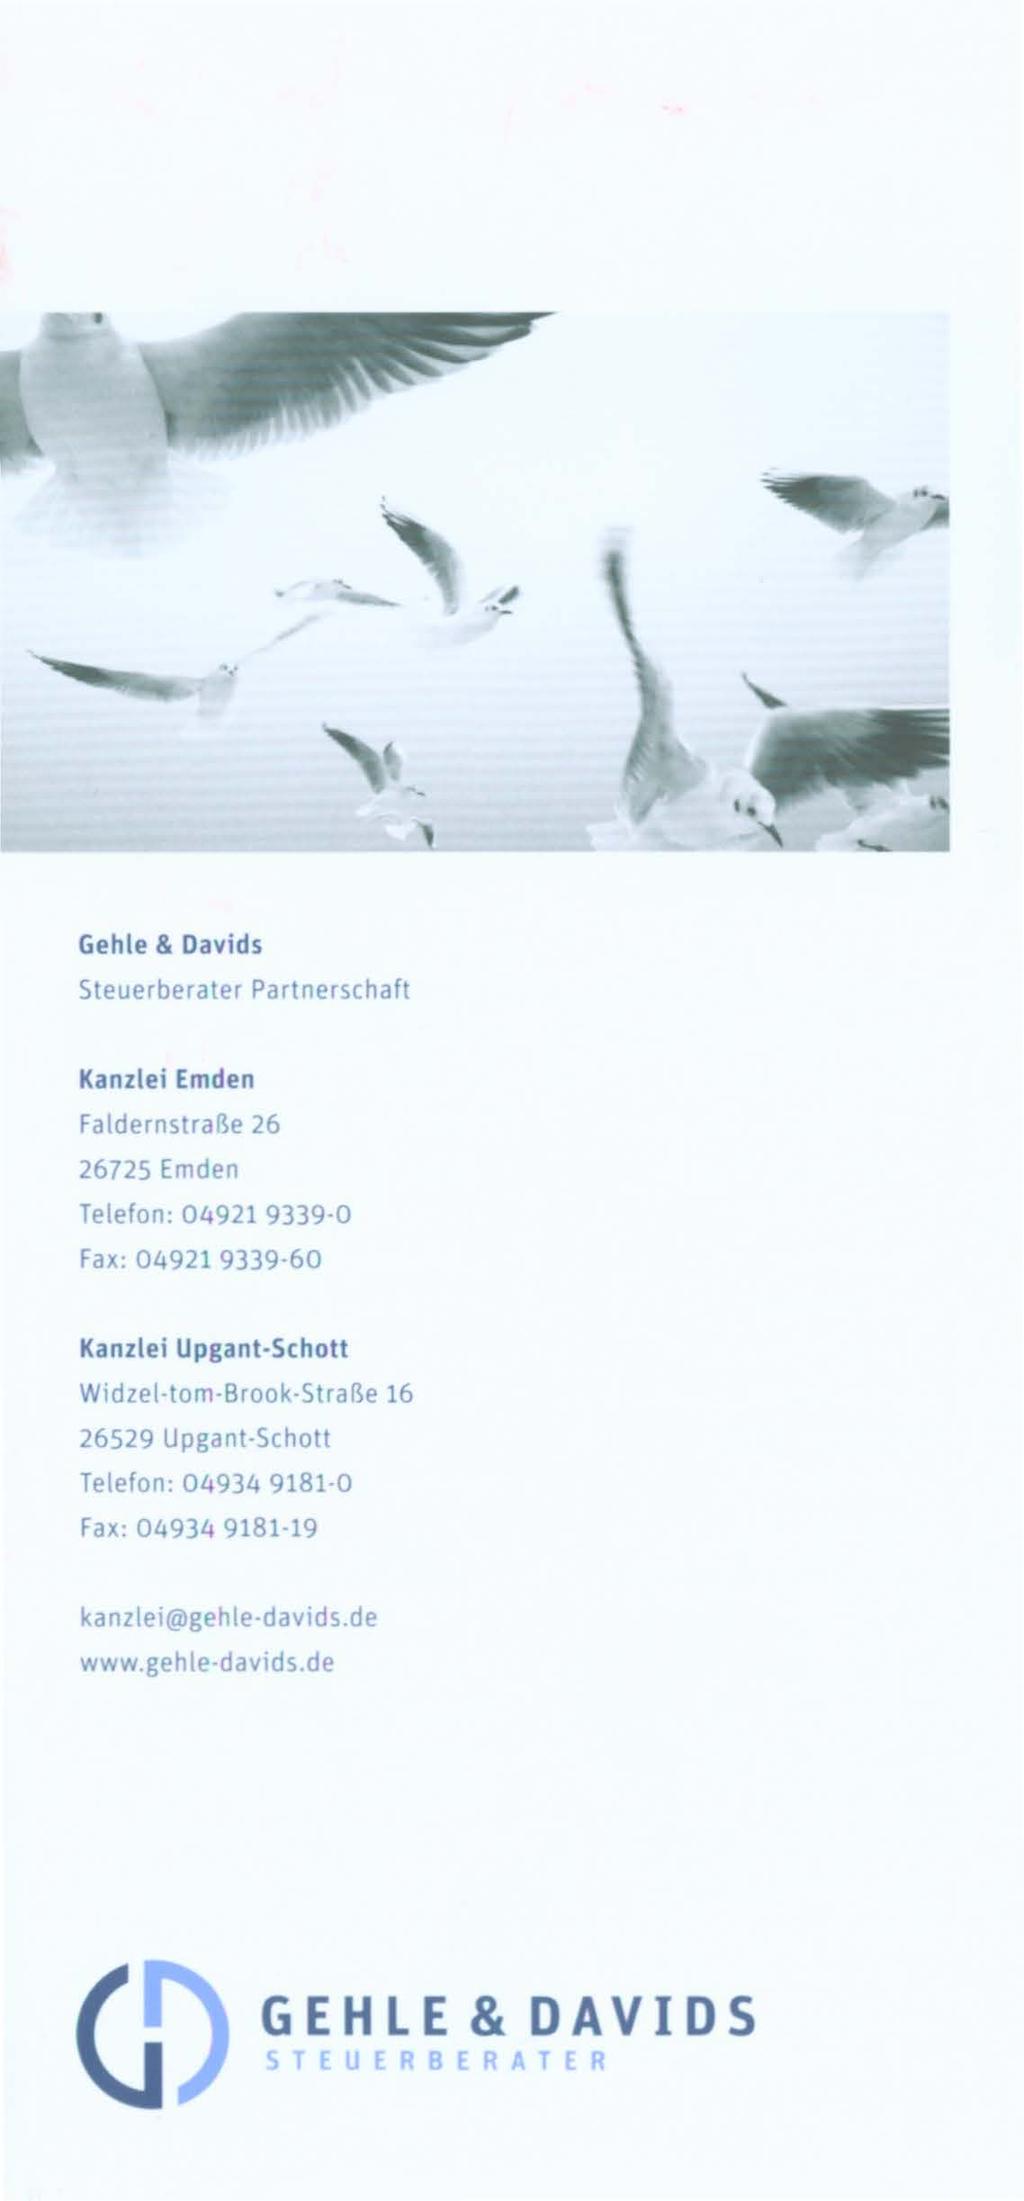 ... Gehle & Davids Steuerberater Partnerschaft Kanzlei Emden Faldernstraße 26 26725 Emden Telefon: 04921 9339 0 Fax: 04921 9339 60 Kanzlei Upgant Schott